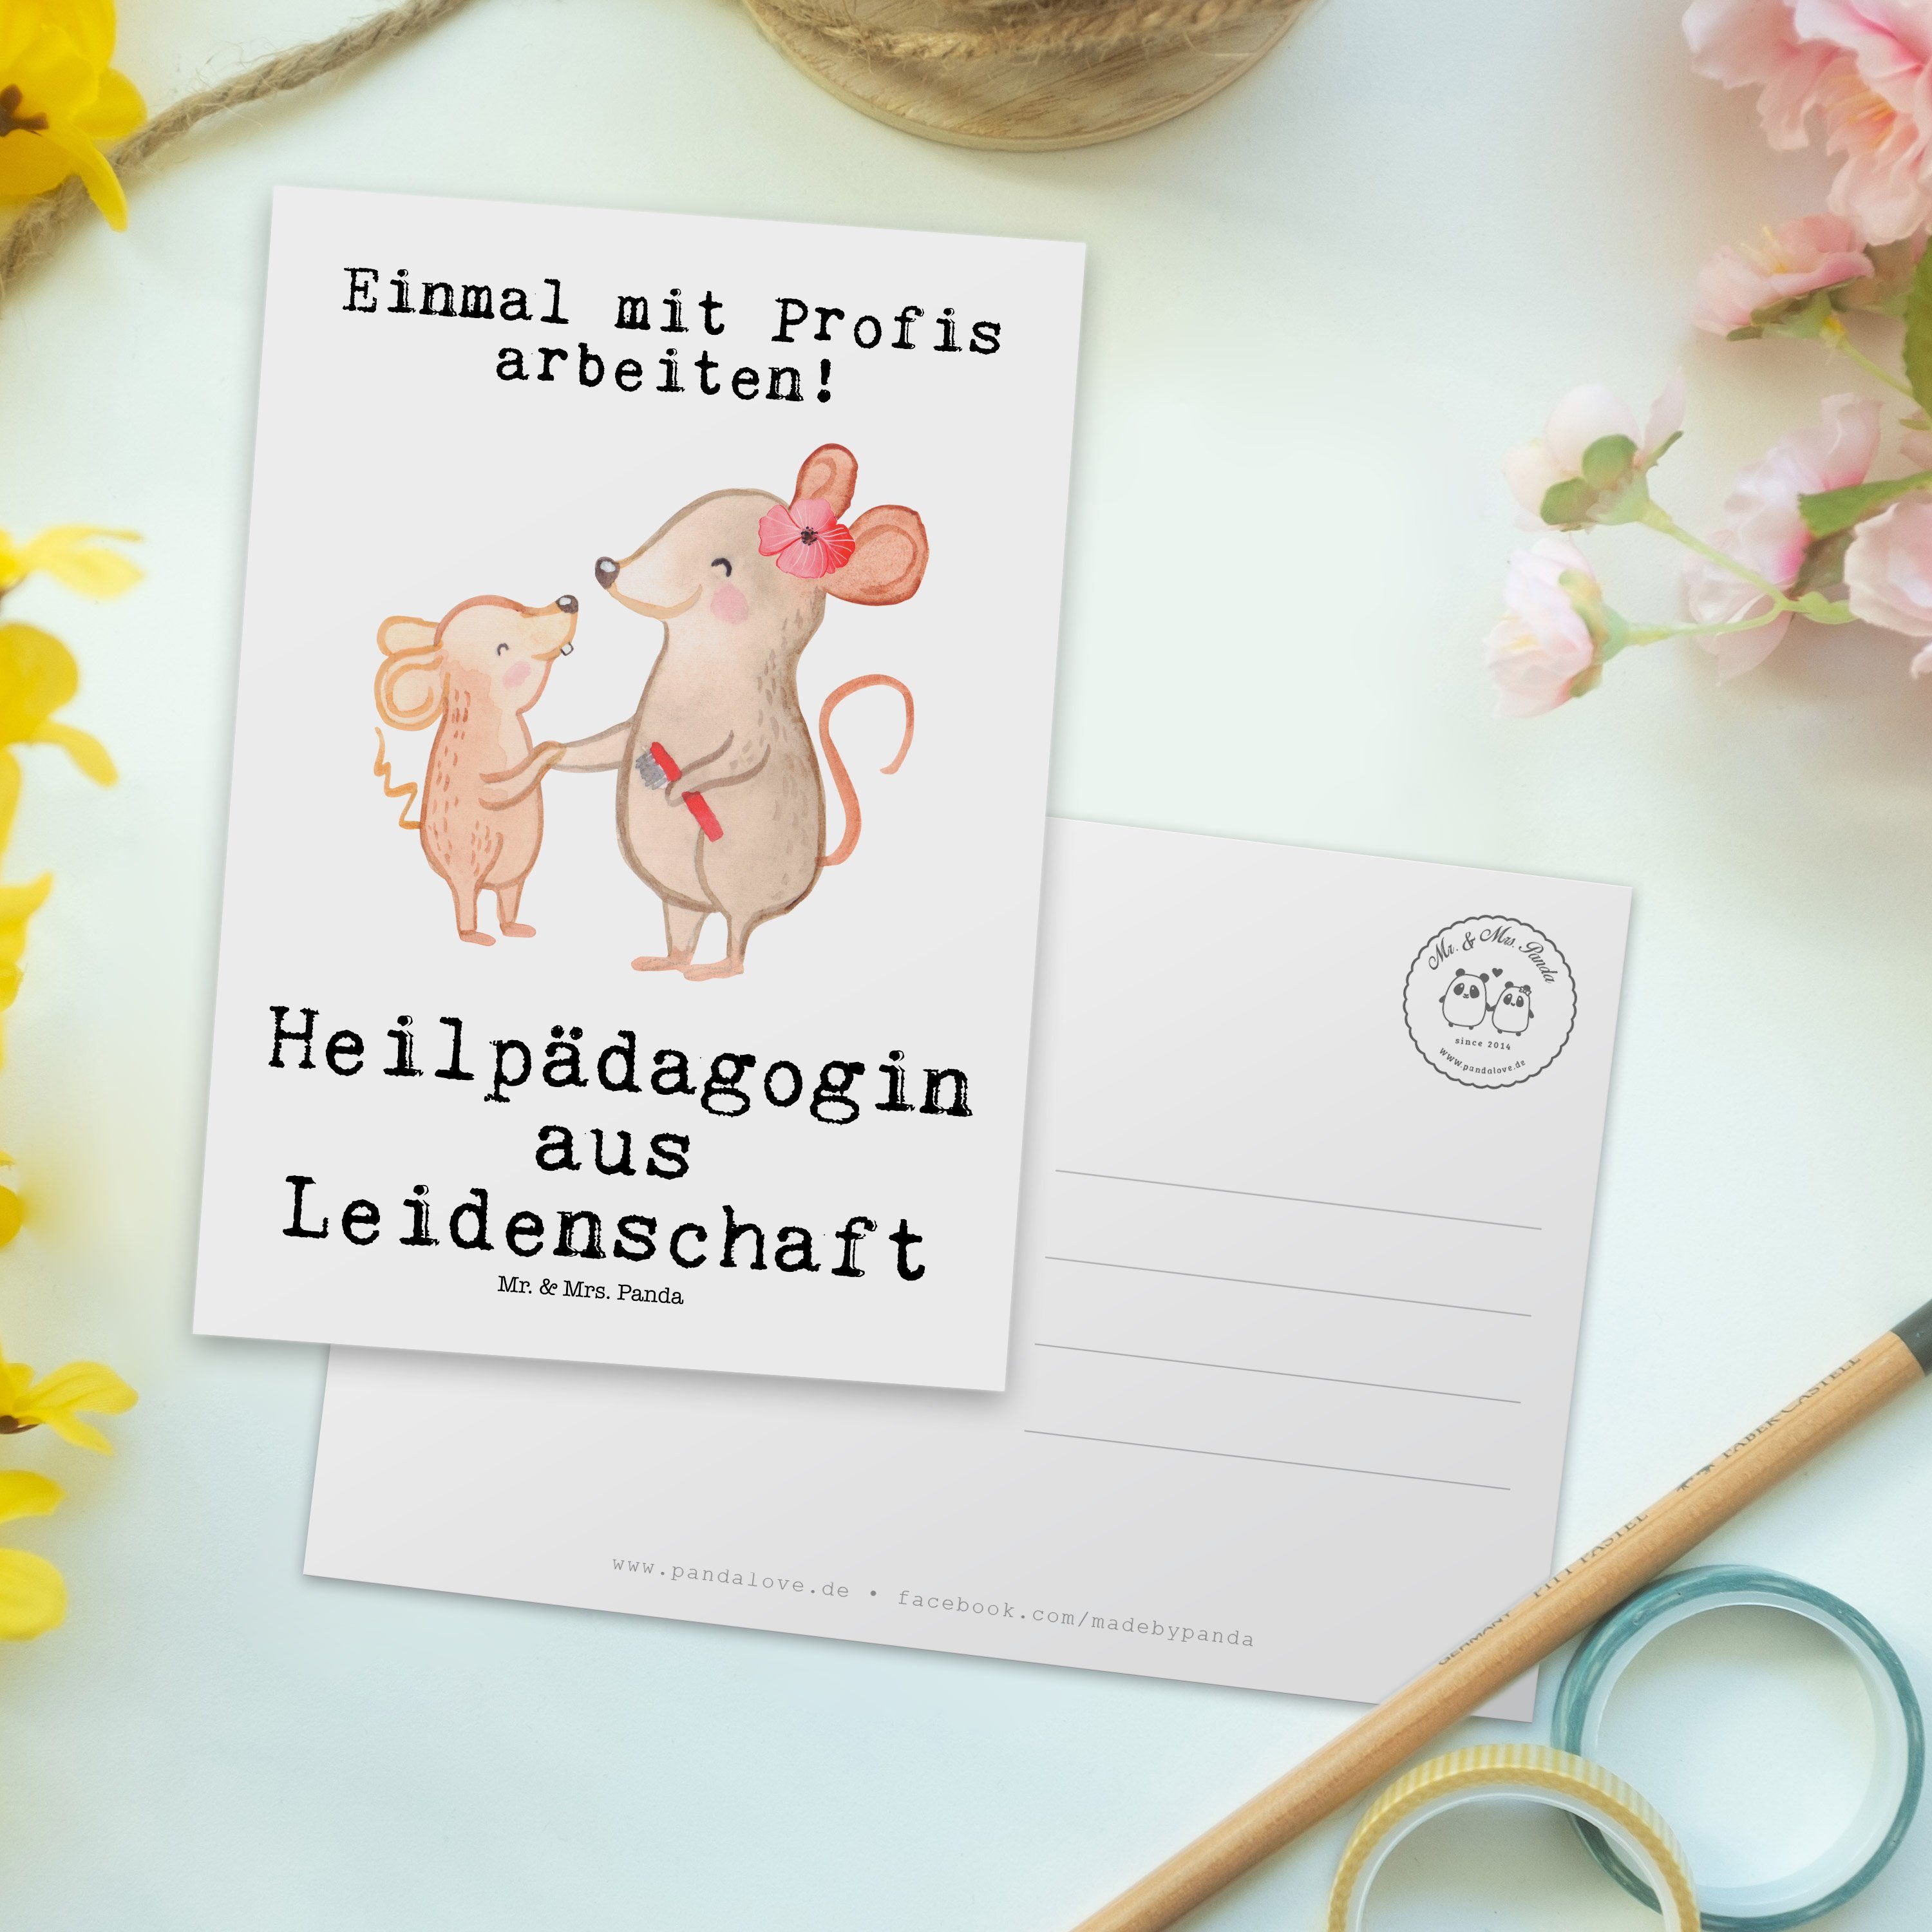 Weiß Kollege Leidenschaft - Mrs. aus - Heilpädagogin Dankeschön, Postkarte & Geschenk, Panda Mr.